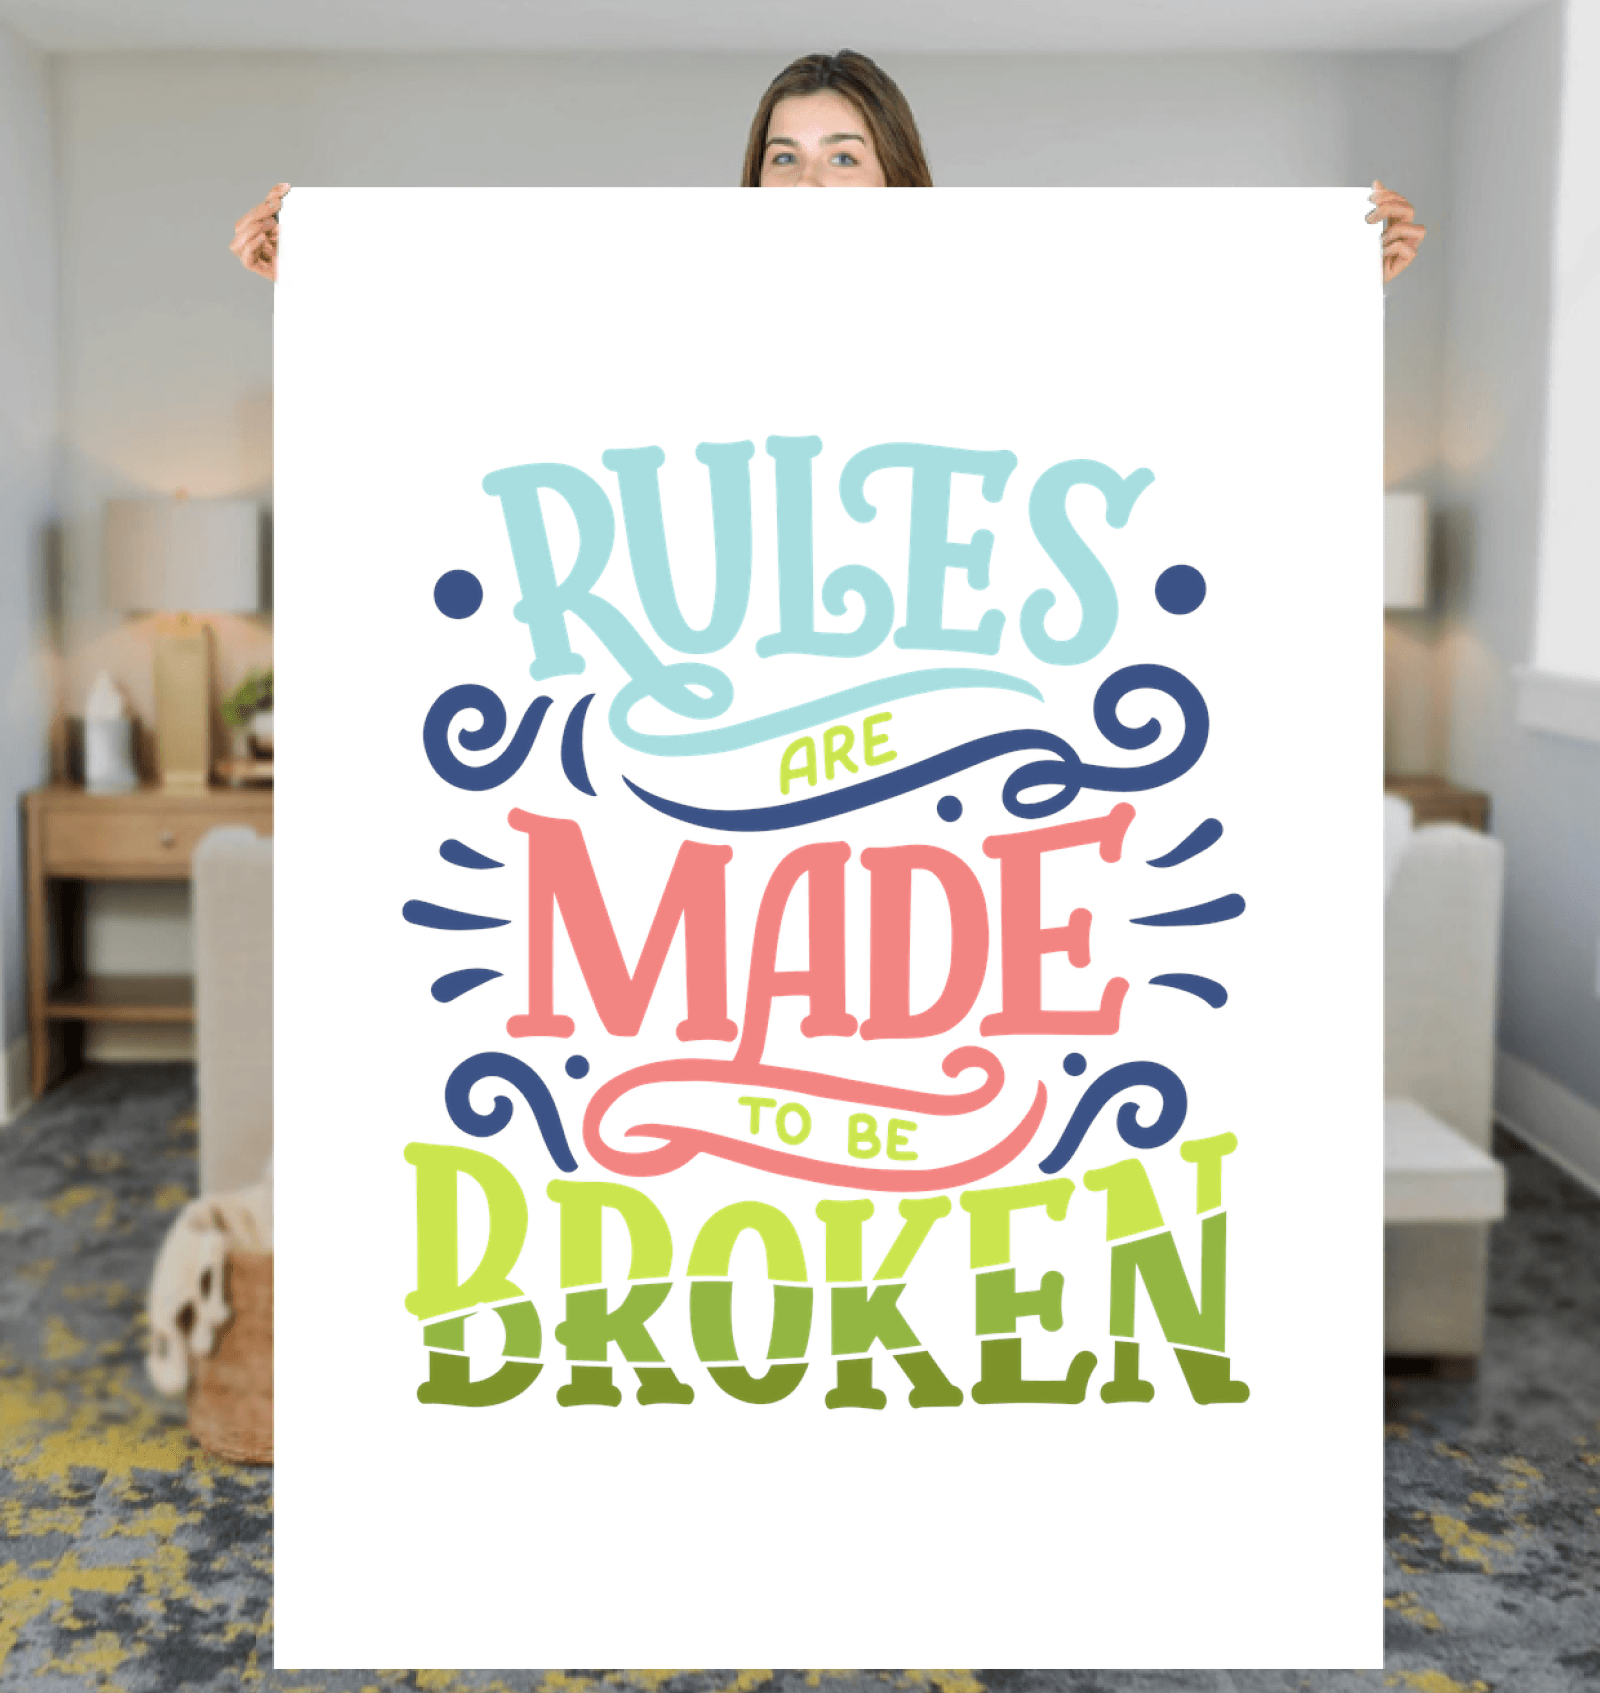 Broken Rules Sherpa Blanket - Beyond T-shirts